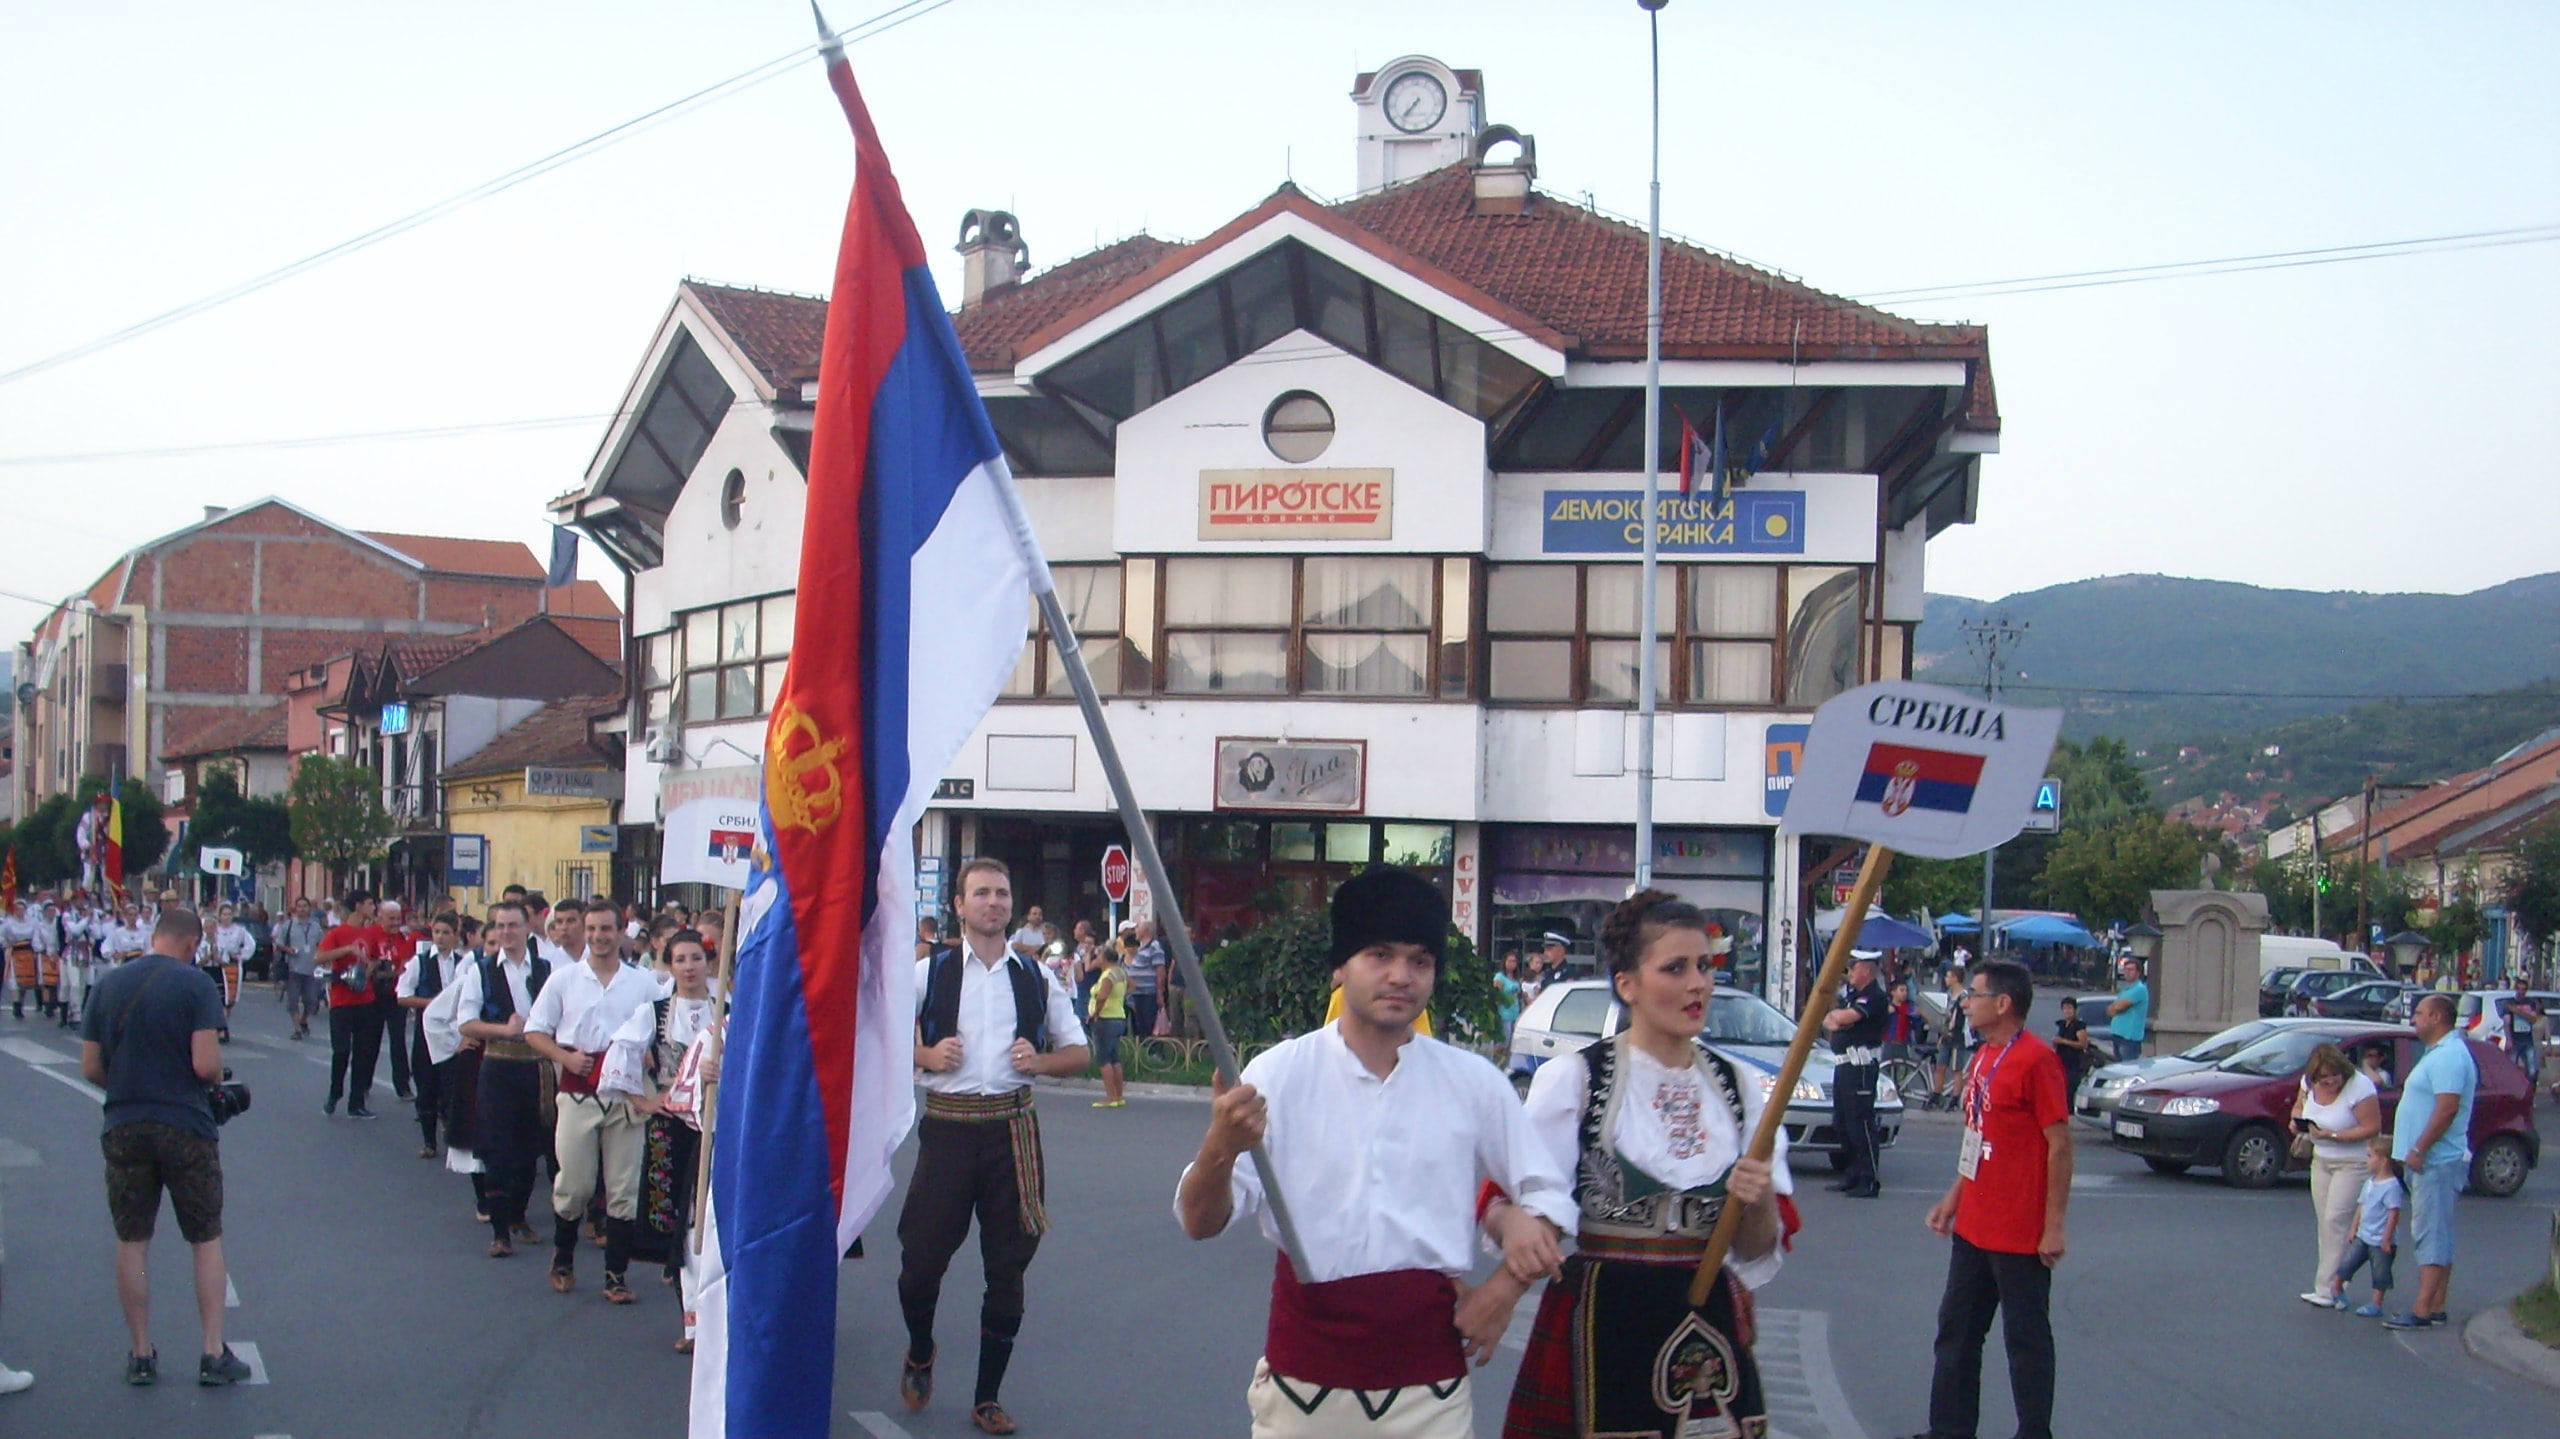 Međunarodni folklorni festival od 7. do 10. avgusta u Pirotu 1